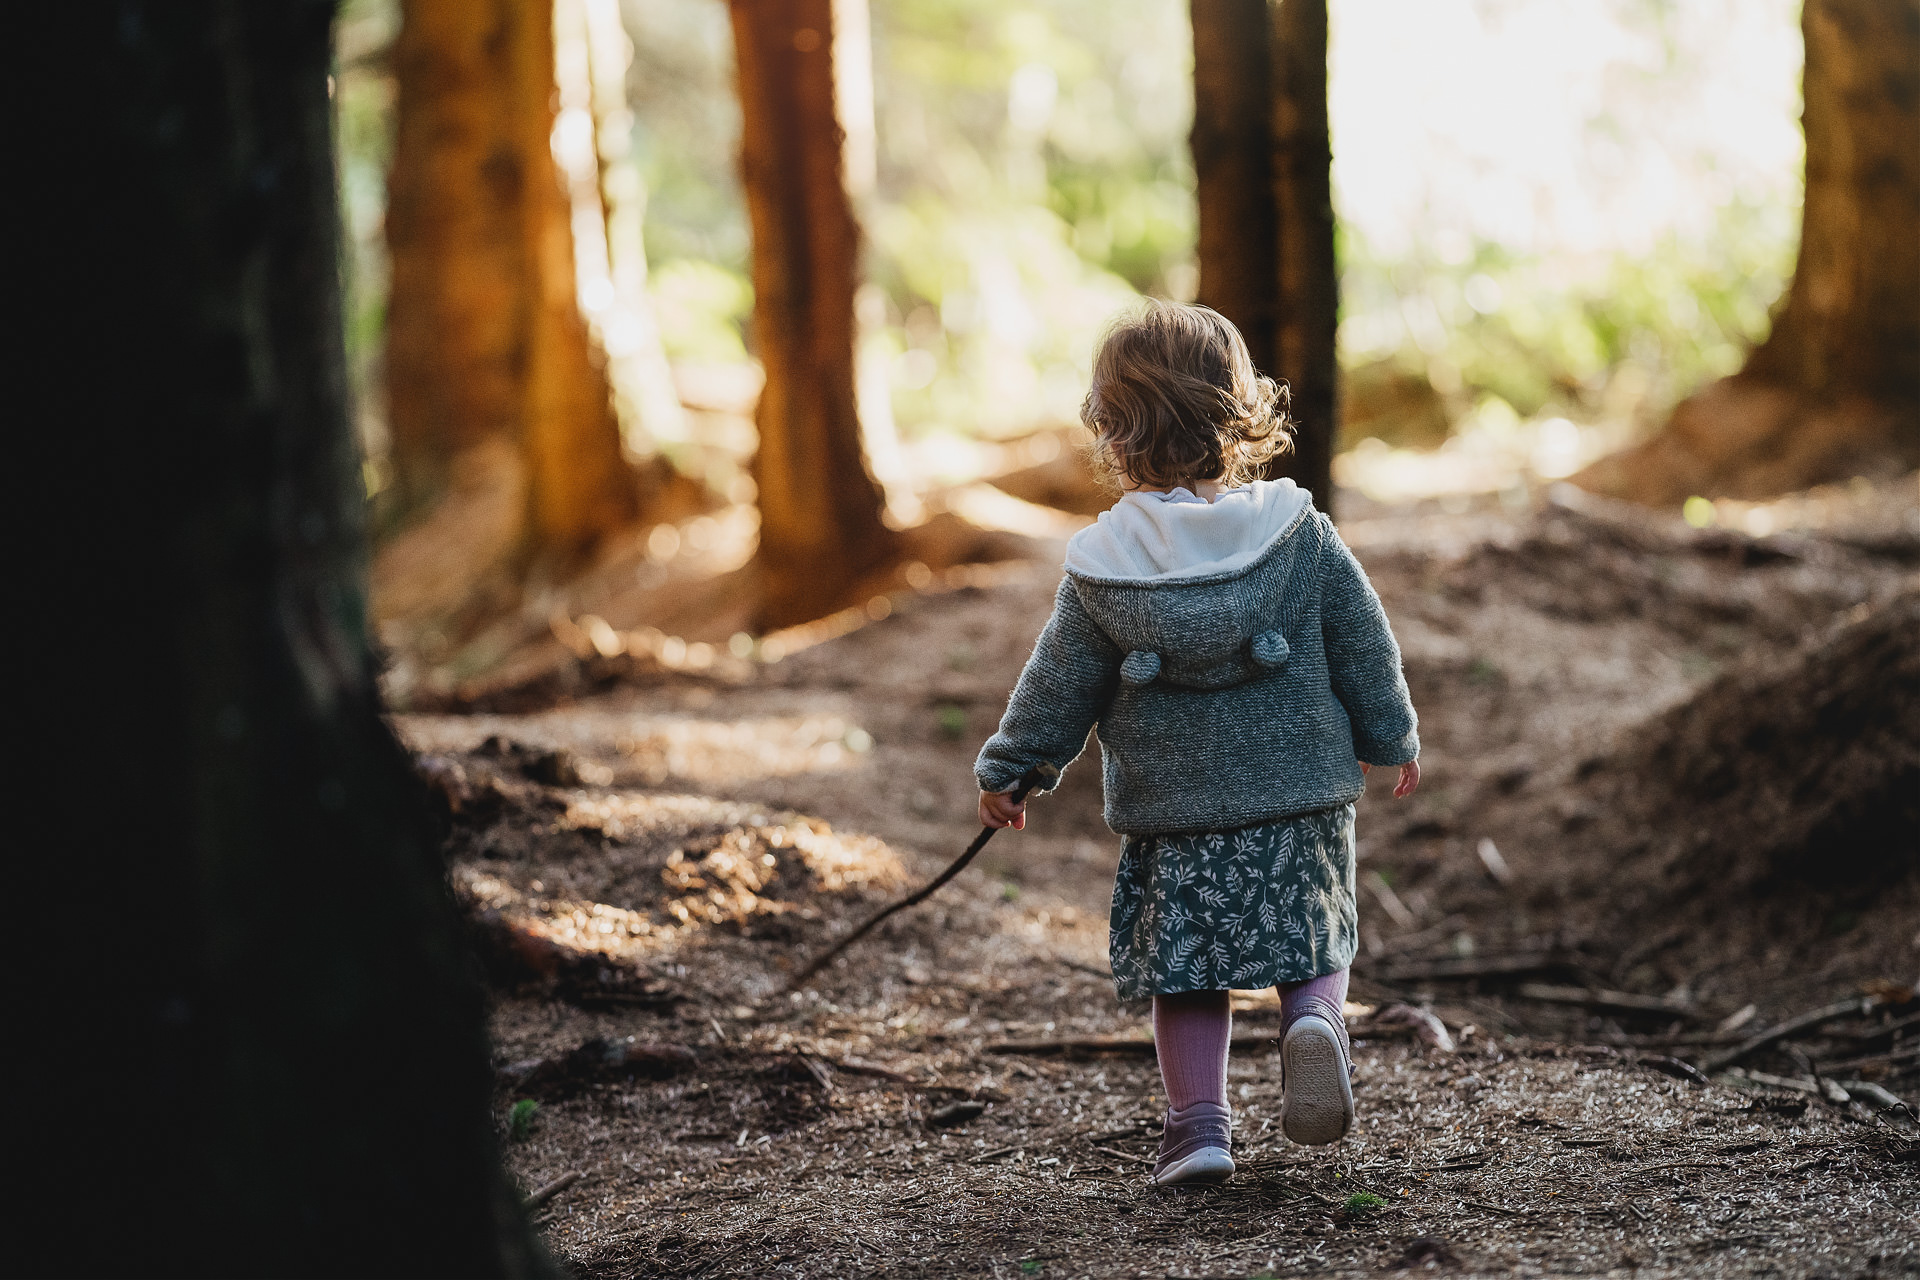 A young girl exploring woodland